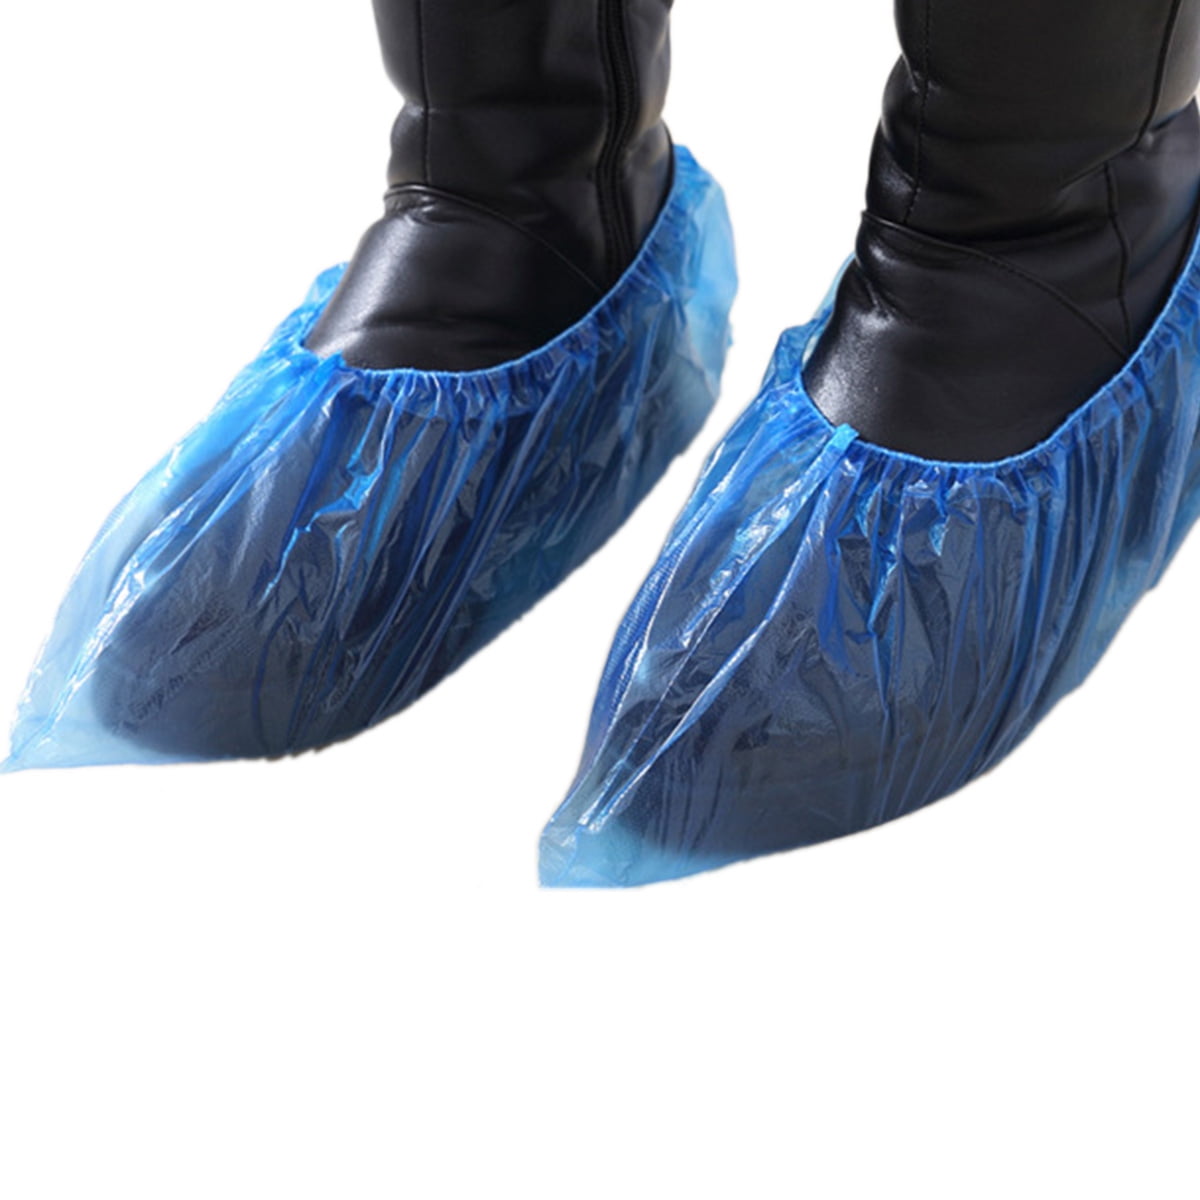 disposable shoe covers walmart